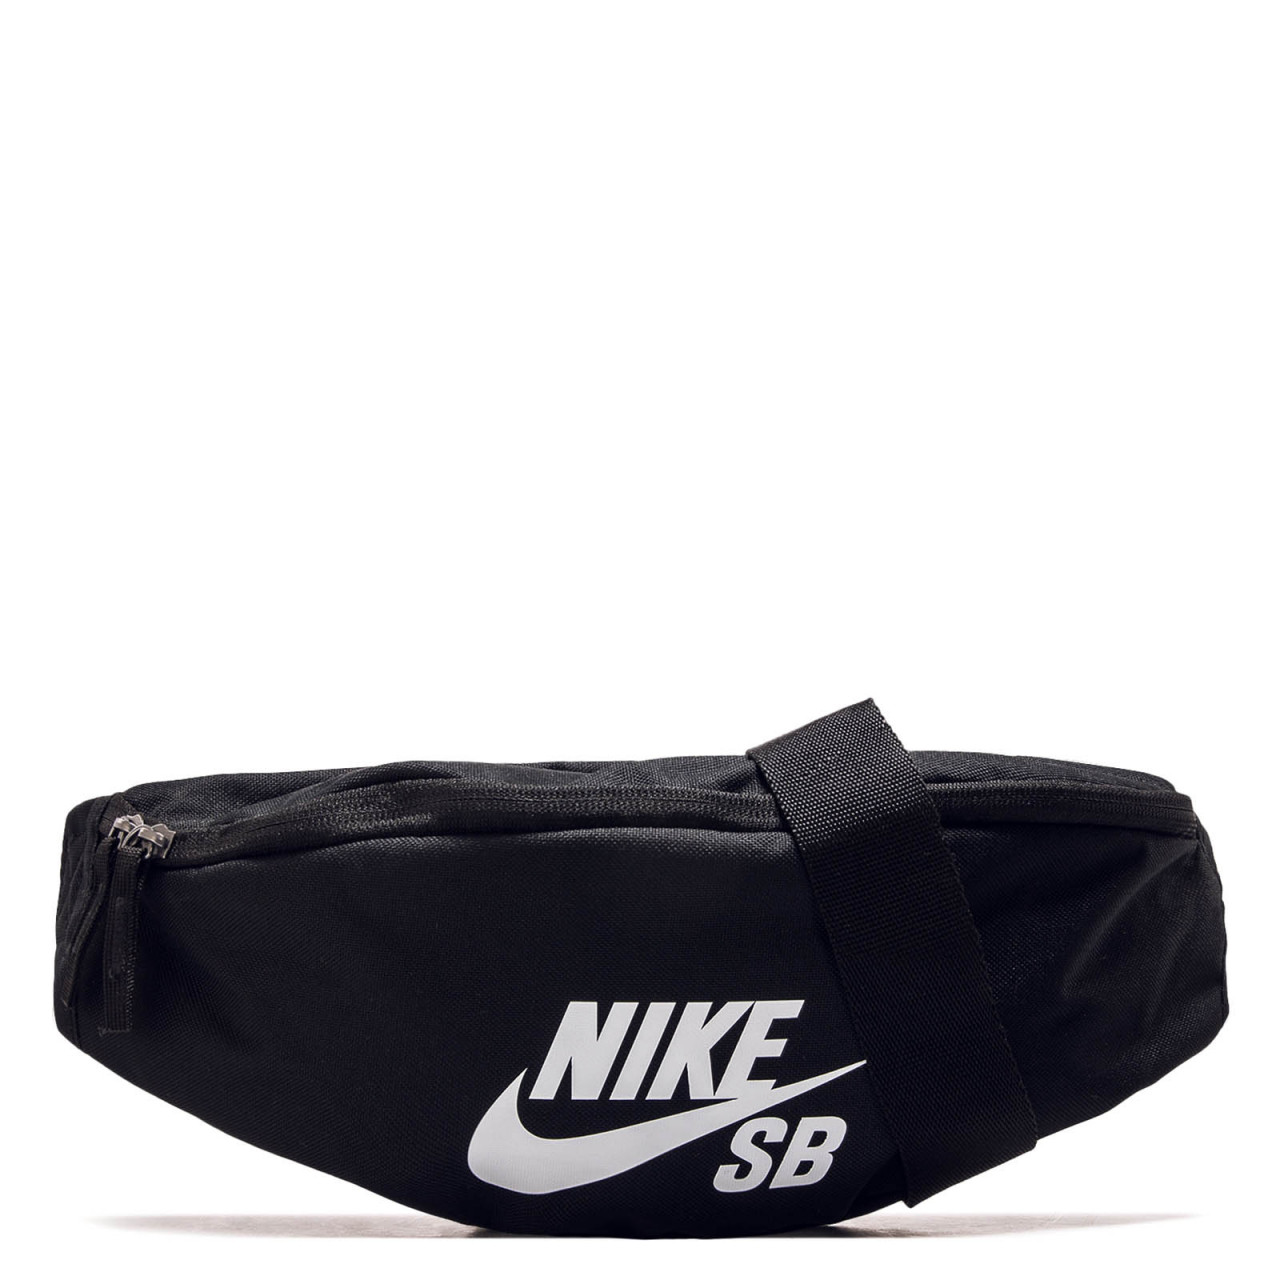 Nike SB Hip Bag Heritage Black White